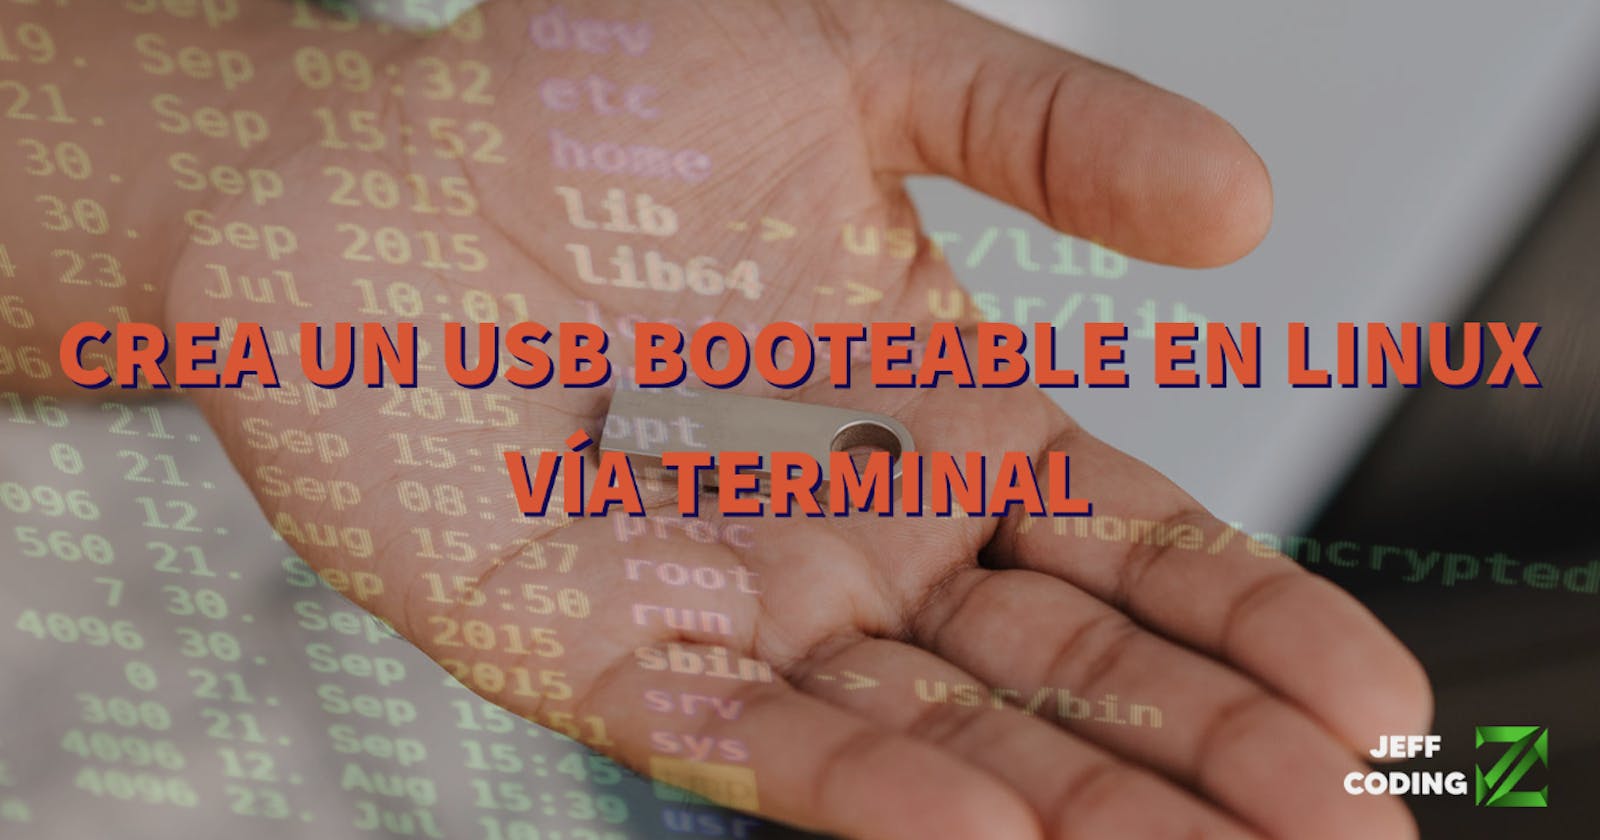 Crea un USB booteable desde la terminal | Linux